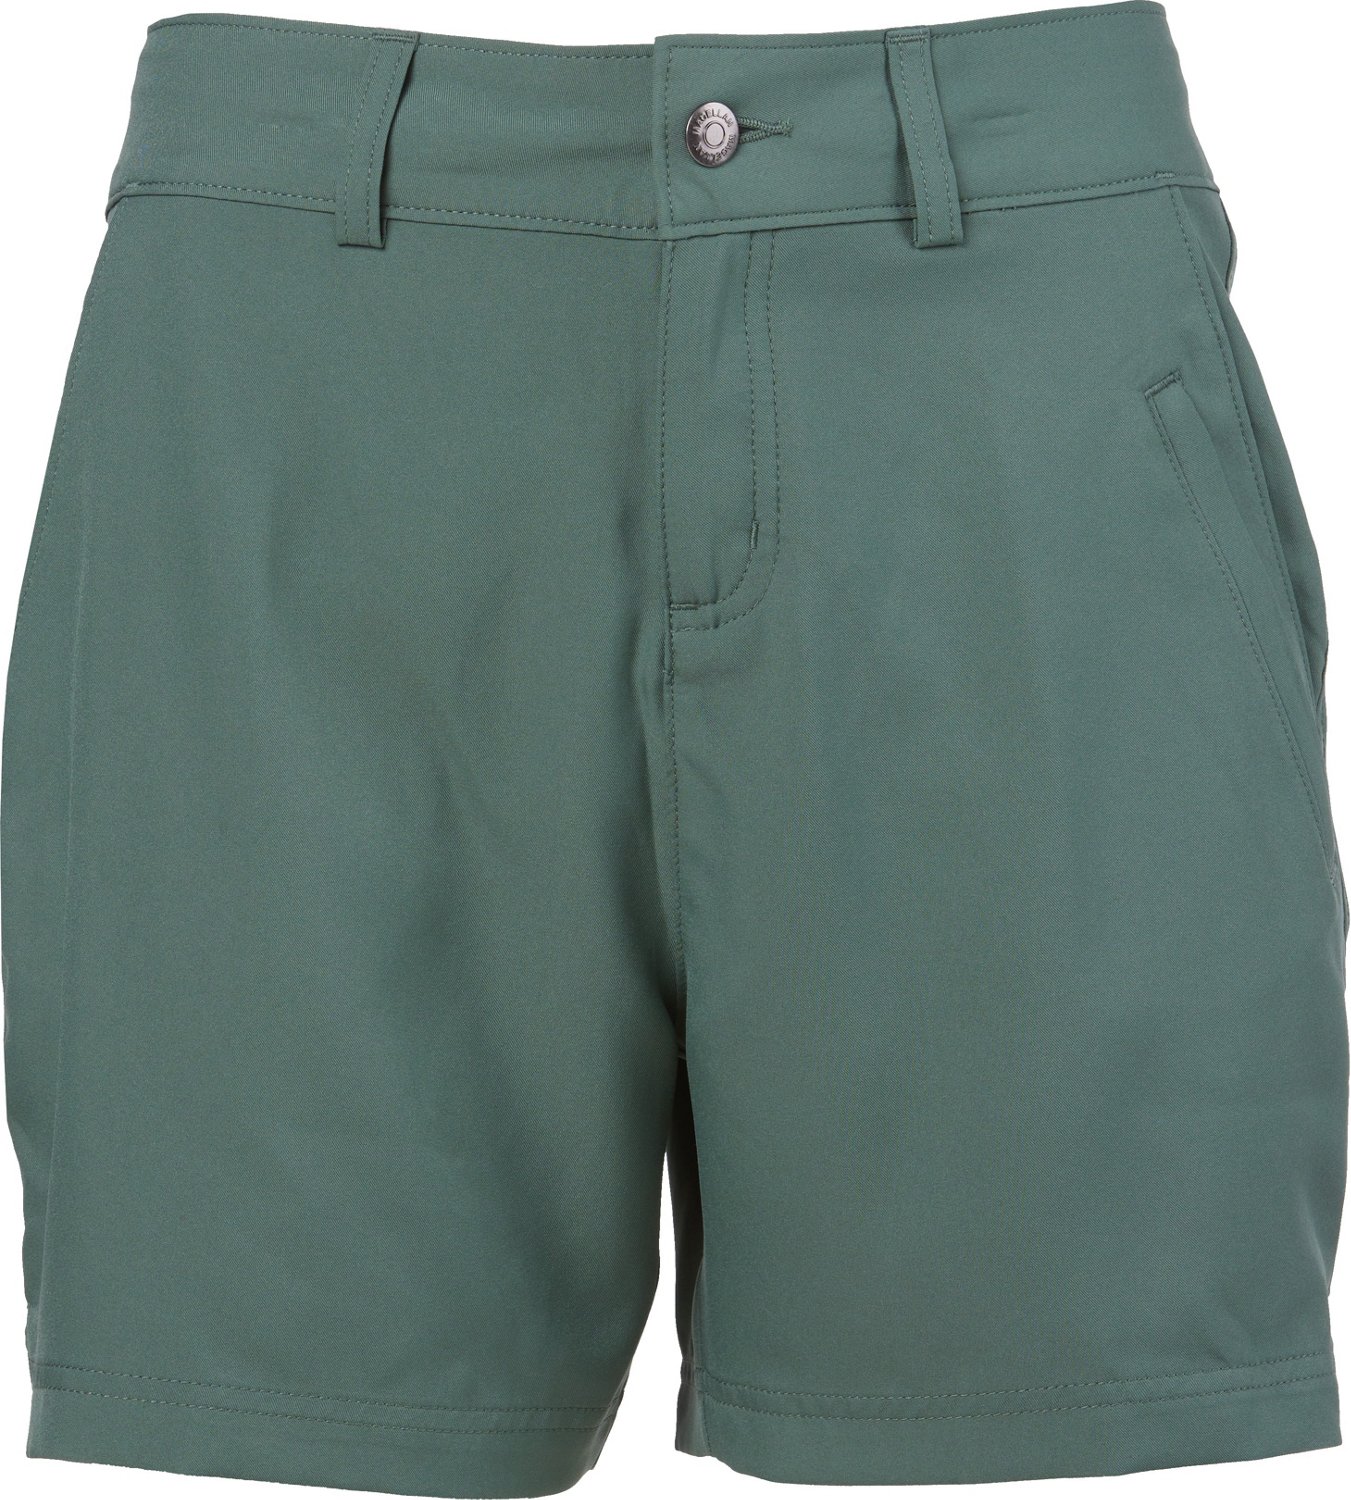  Shimano WP-043T Fishing Wear, Pants, SS Light Shorts, S - 2XL  : Clothing, Shoes & Jewelry